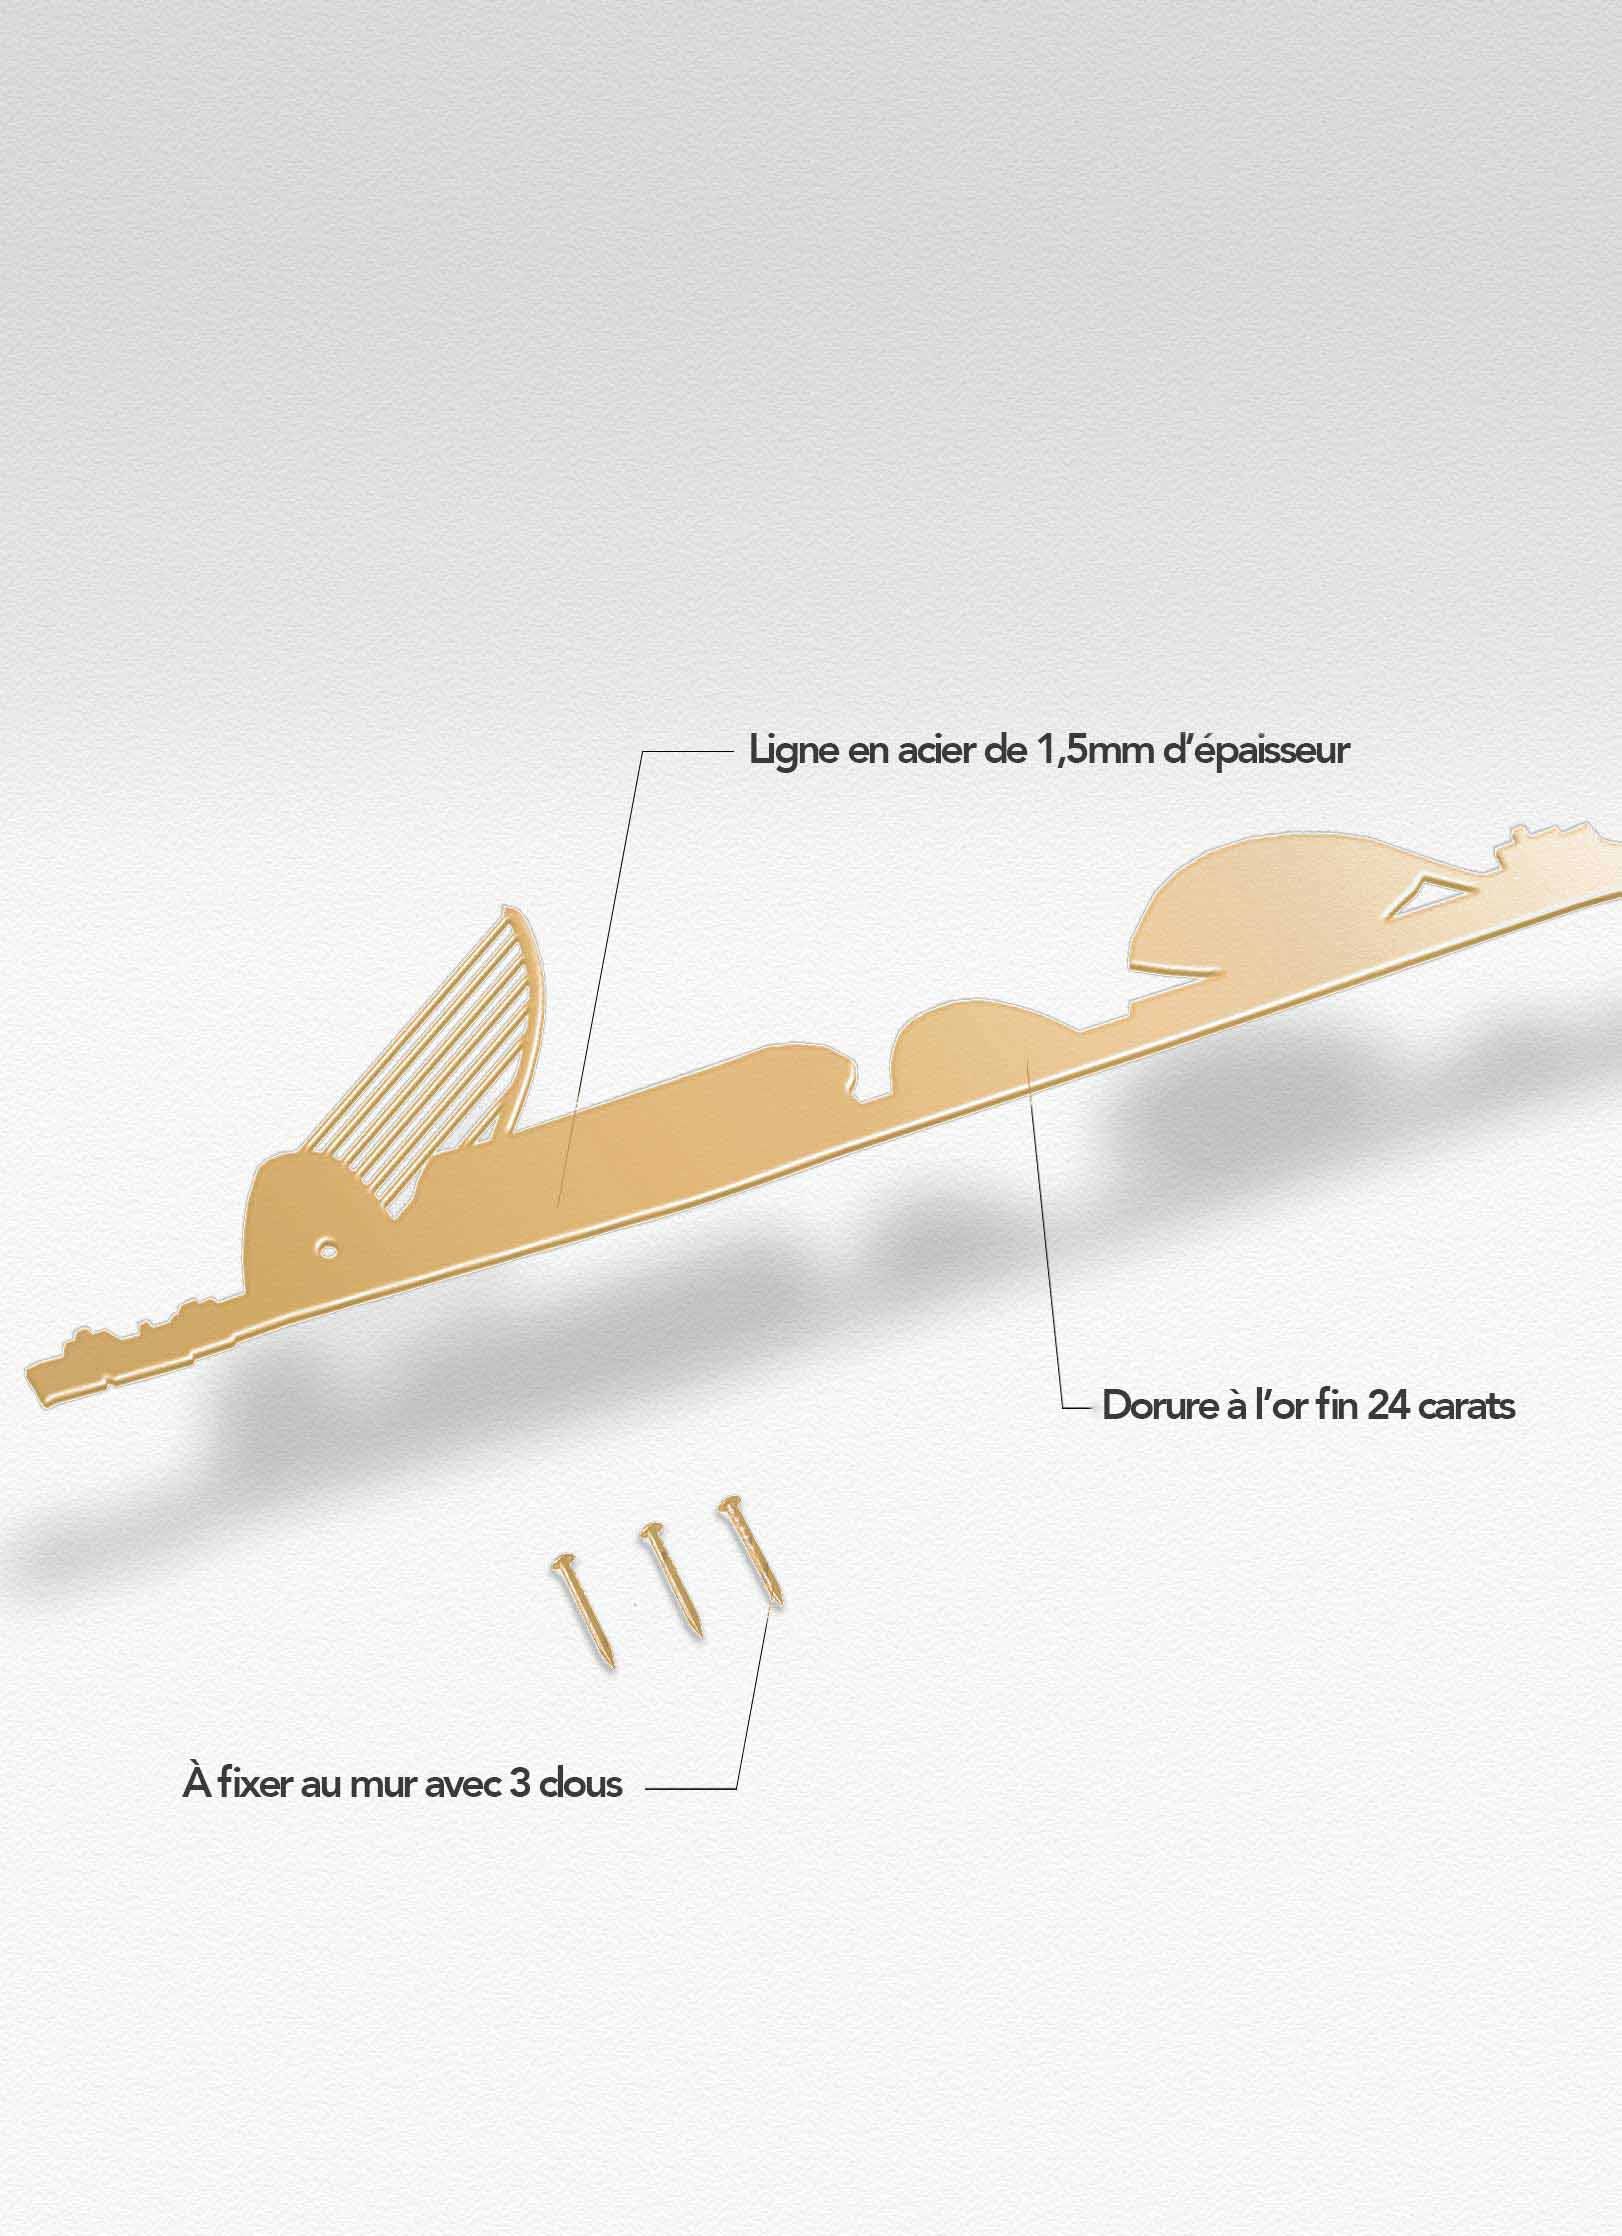 Presentation of the skyline of Valence doré